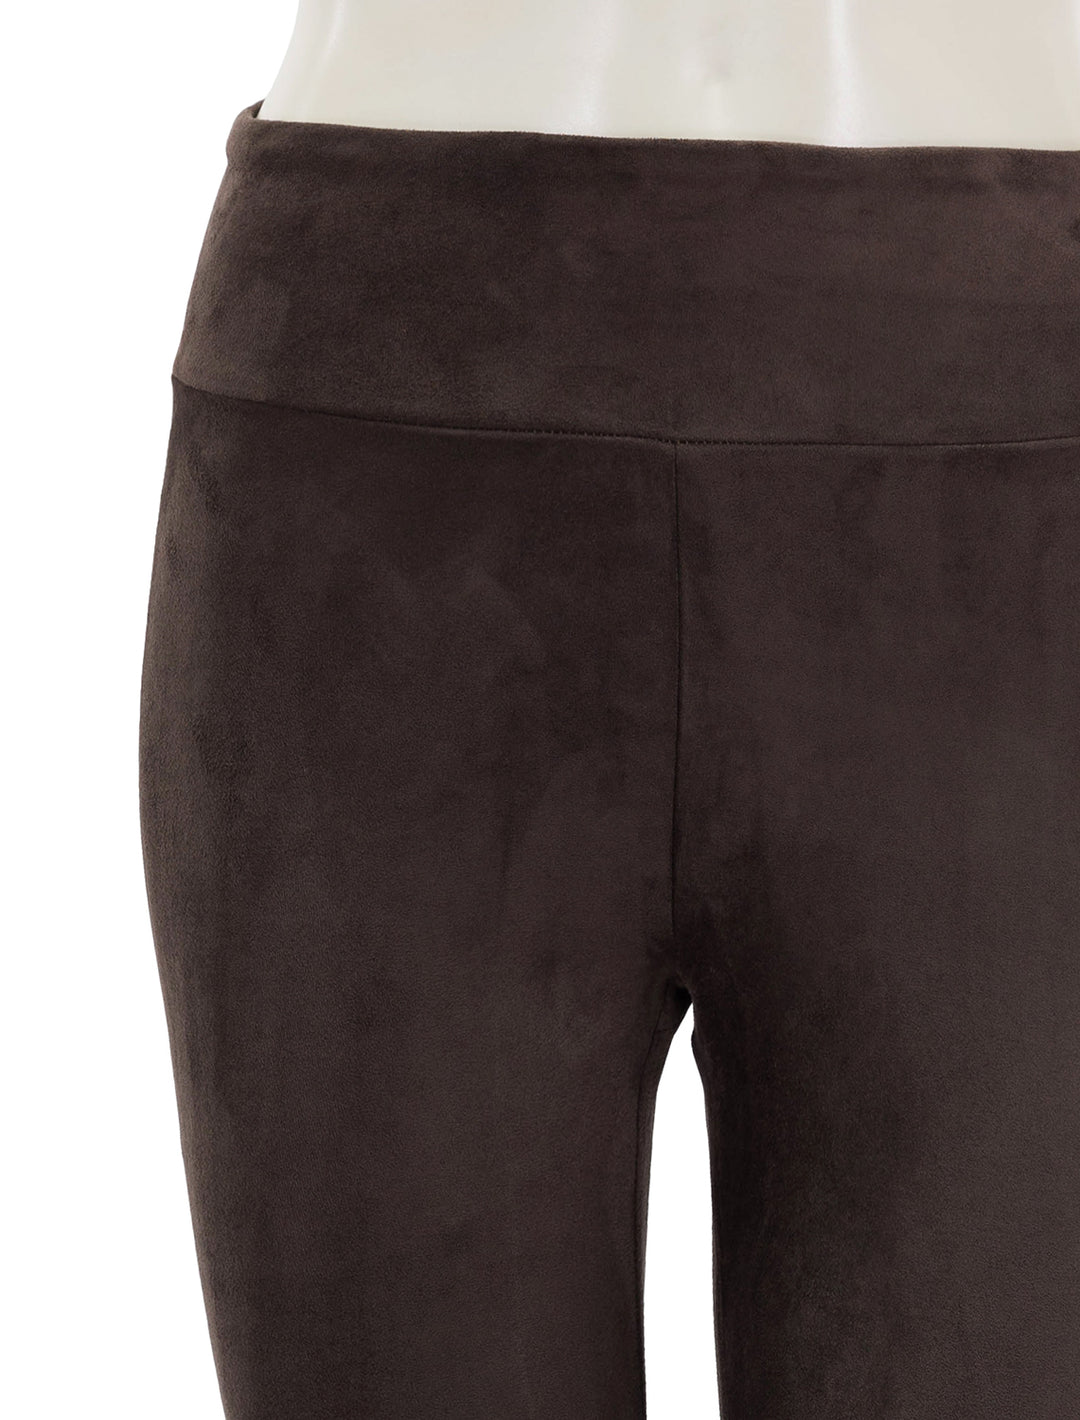 Close-up view of Splendid's vegan suede leggings in chocolate.